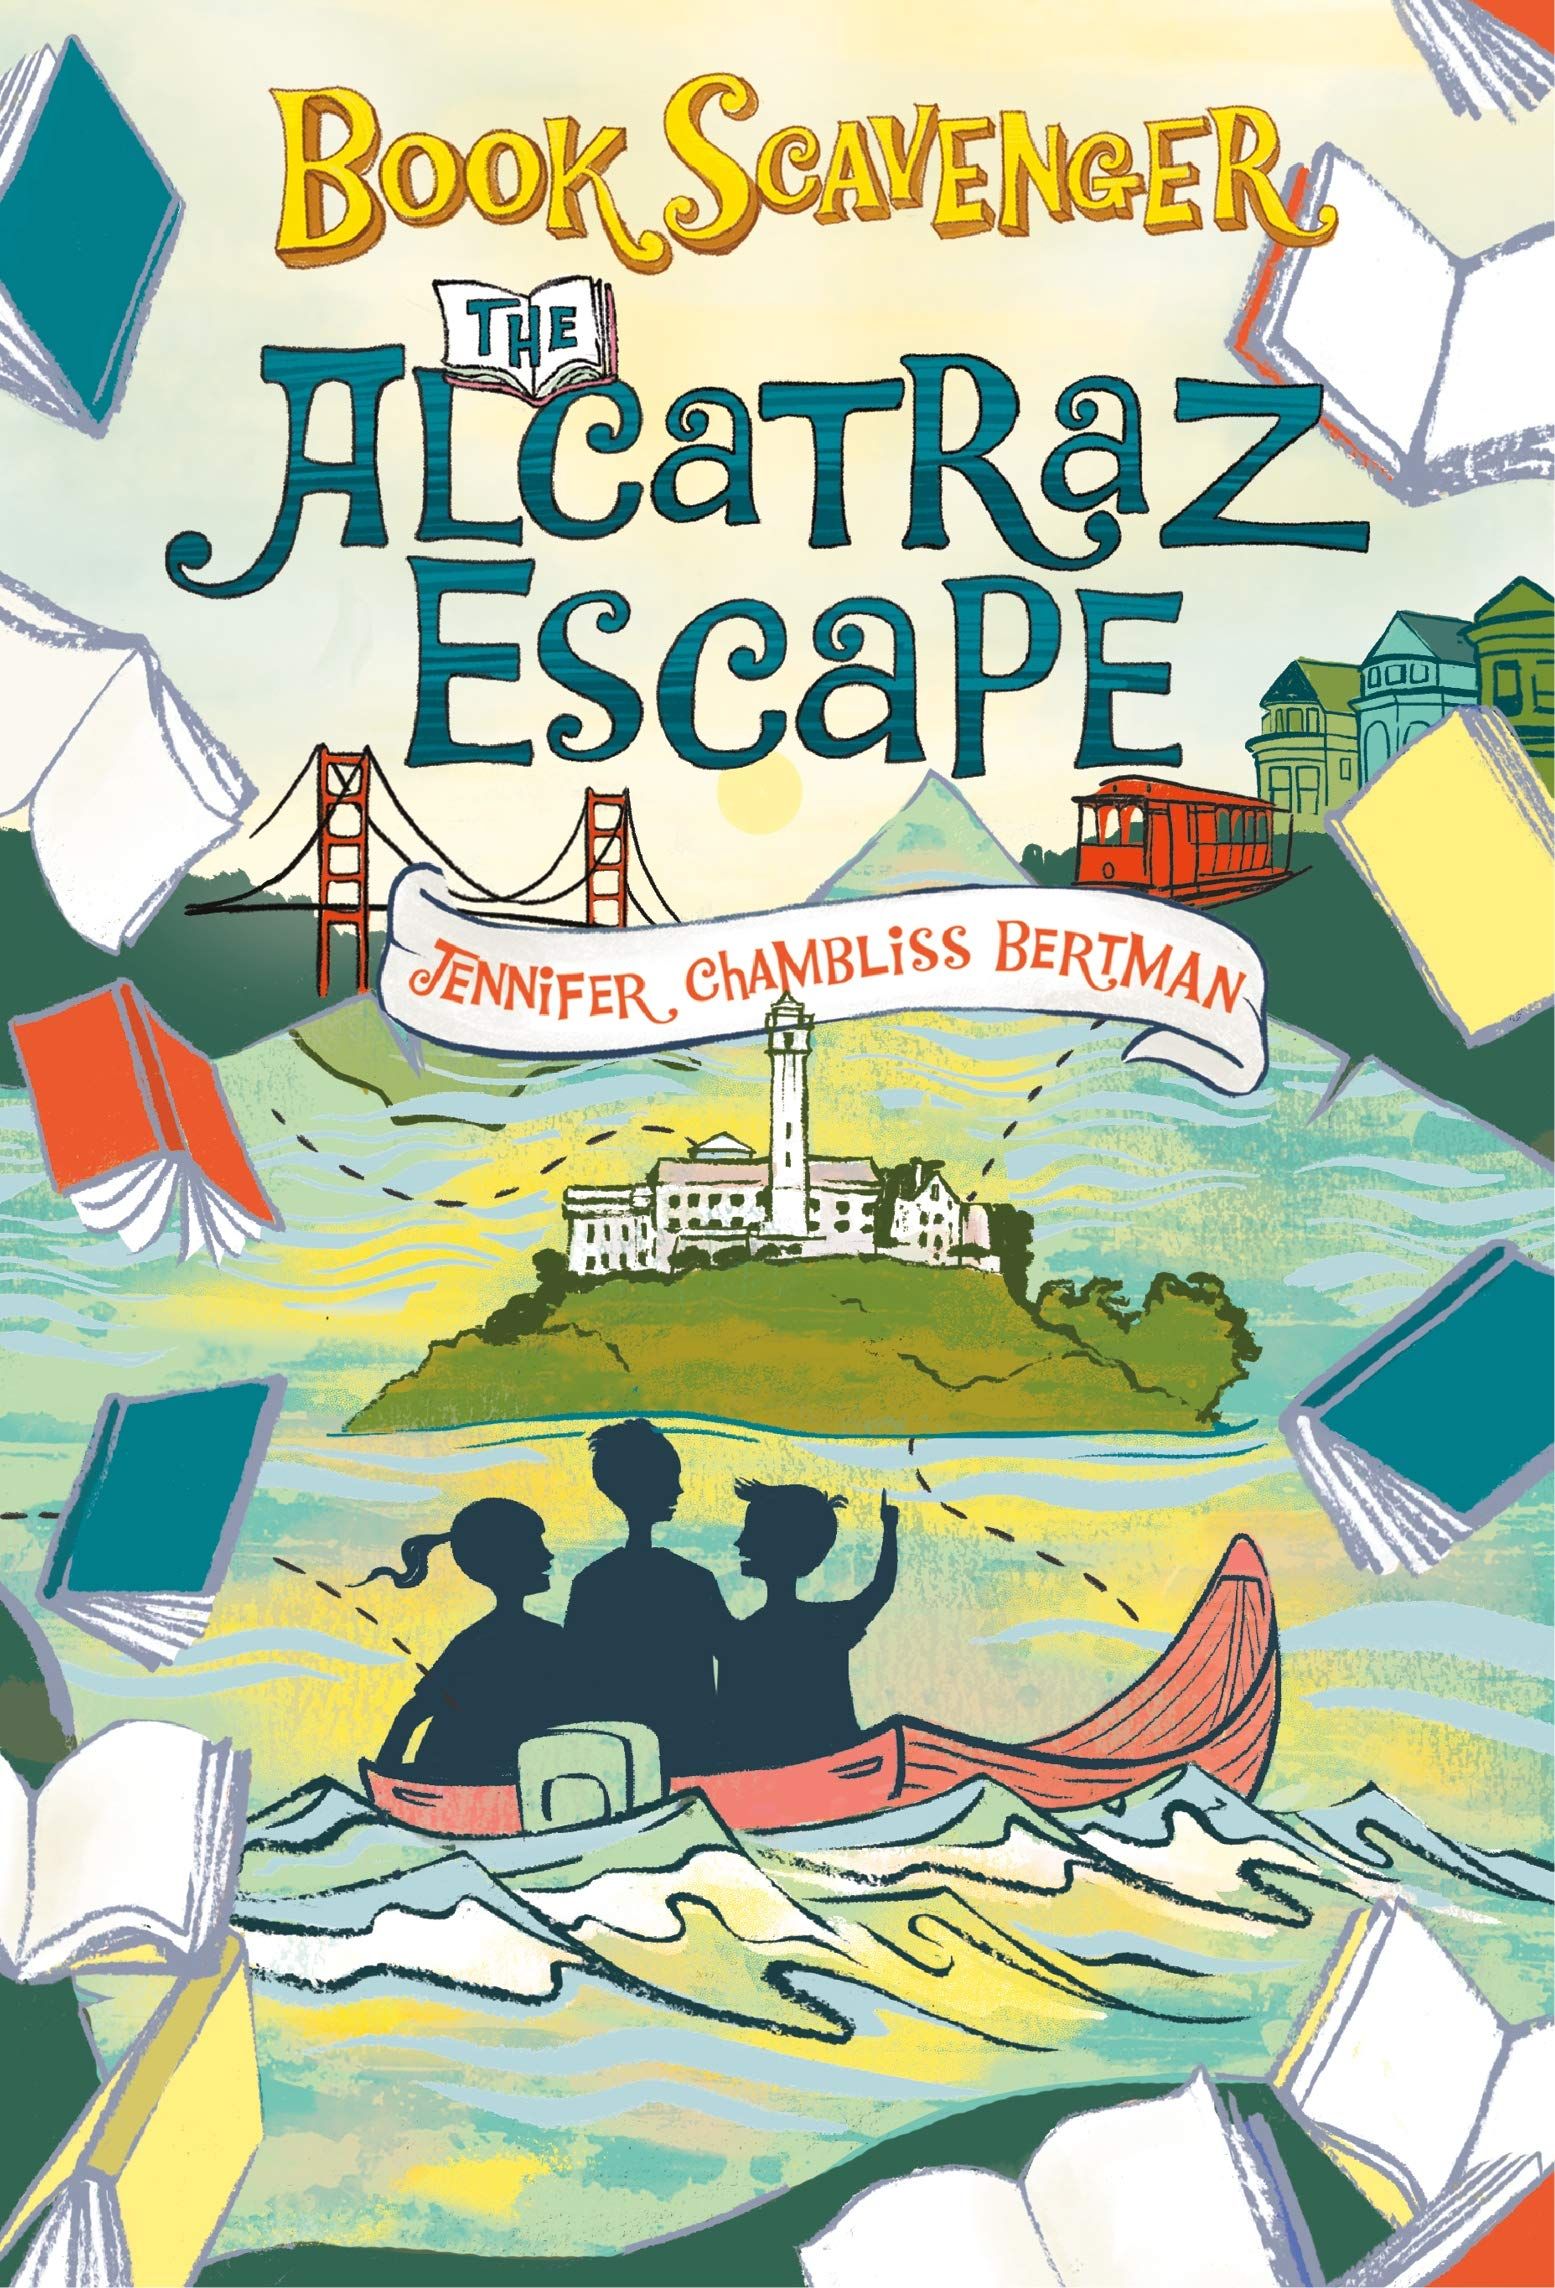 Book Scavenger: The Alcatraz Escape by Jennifer Chambliss Bertman